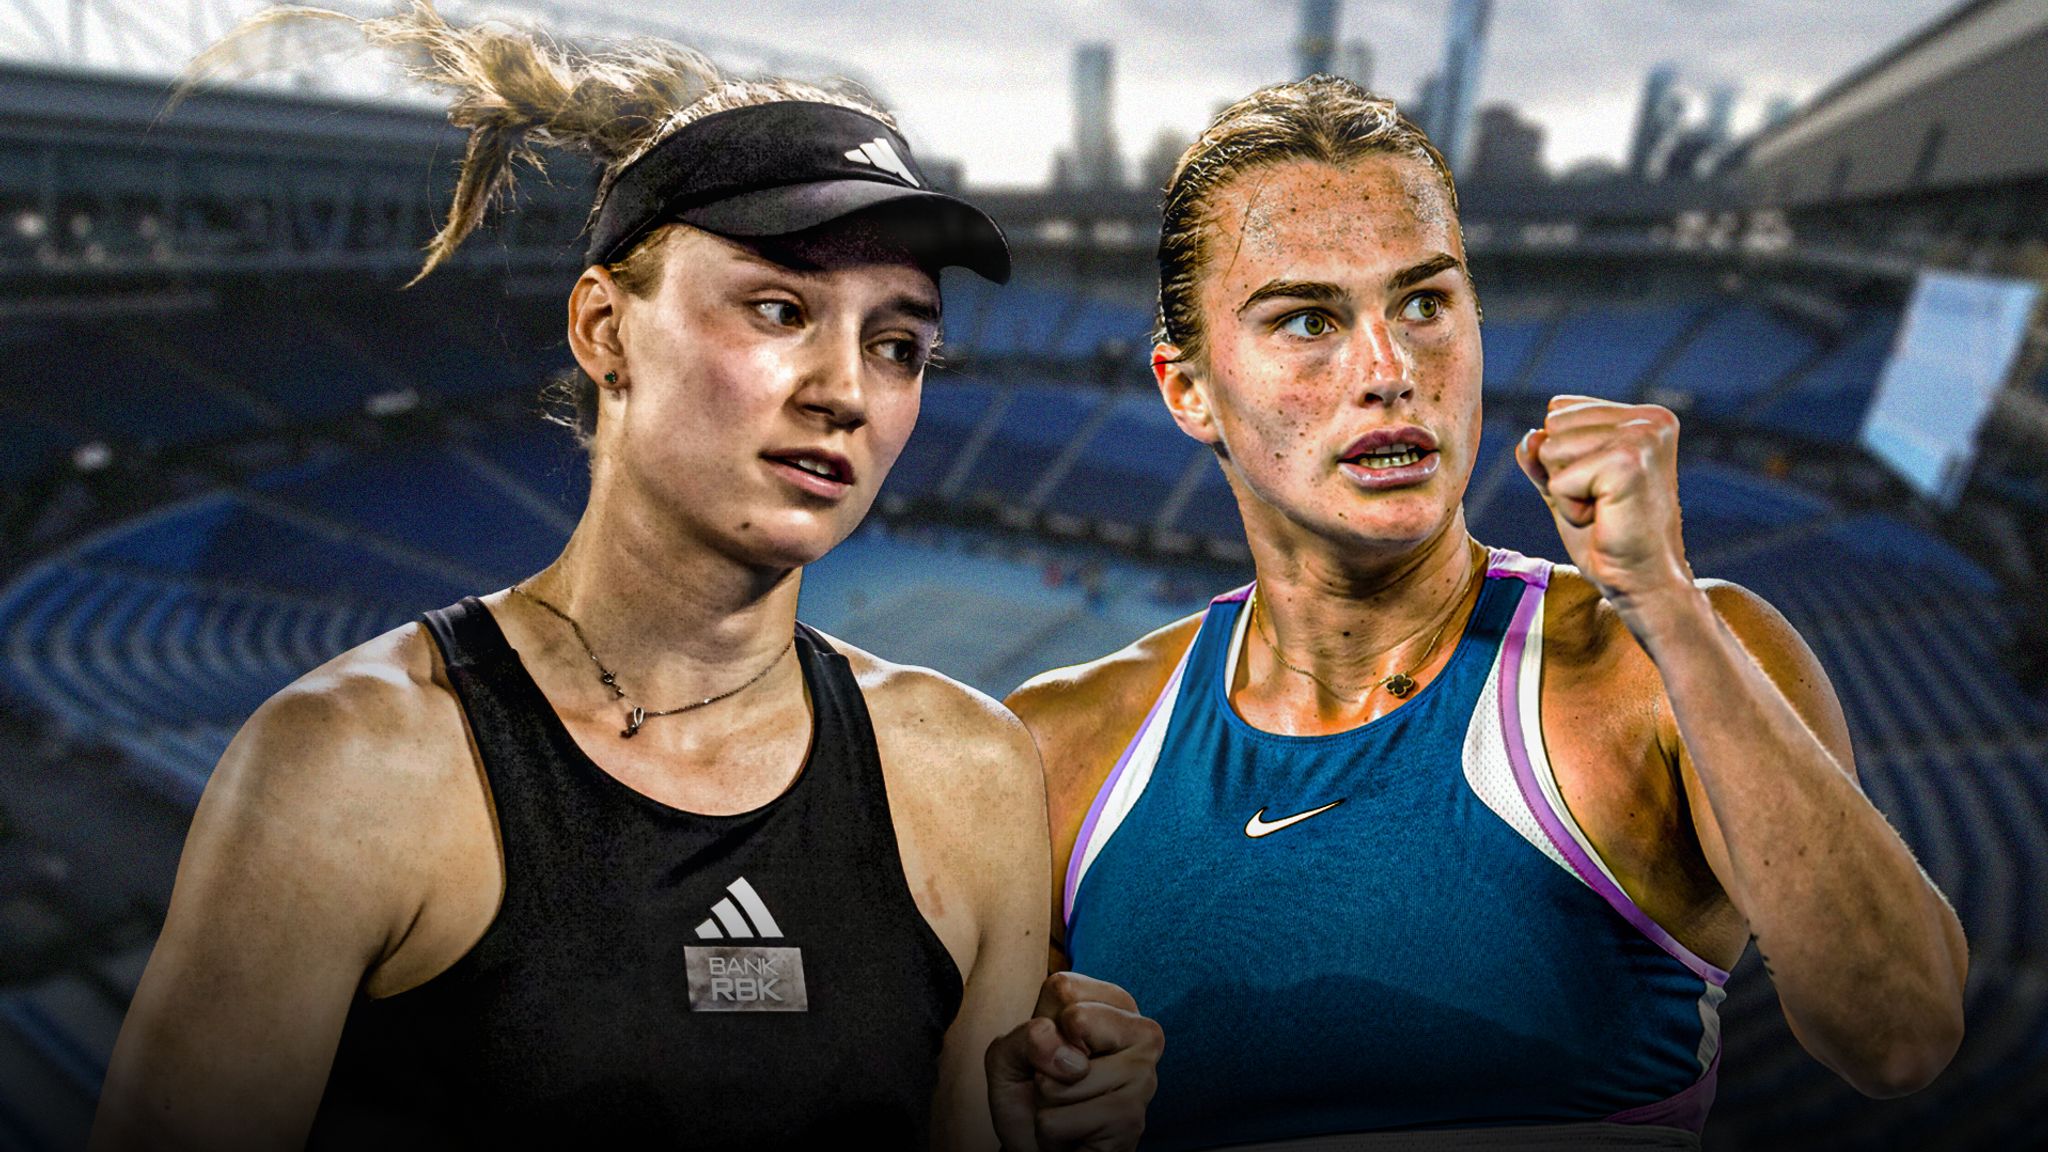 Australian Open Elena Rybakina and Aryna Sabalenka will do battle in big-hitting womens final on Saturday Tennis News Sky Sports